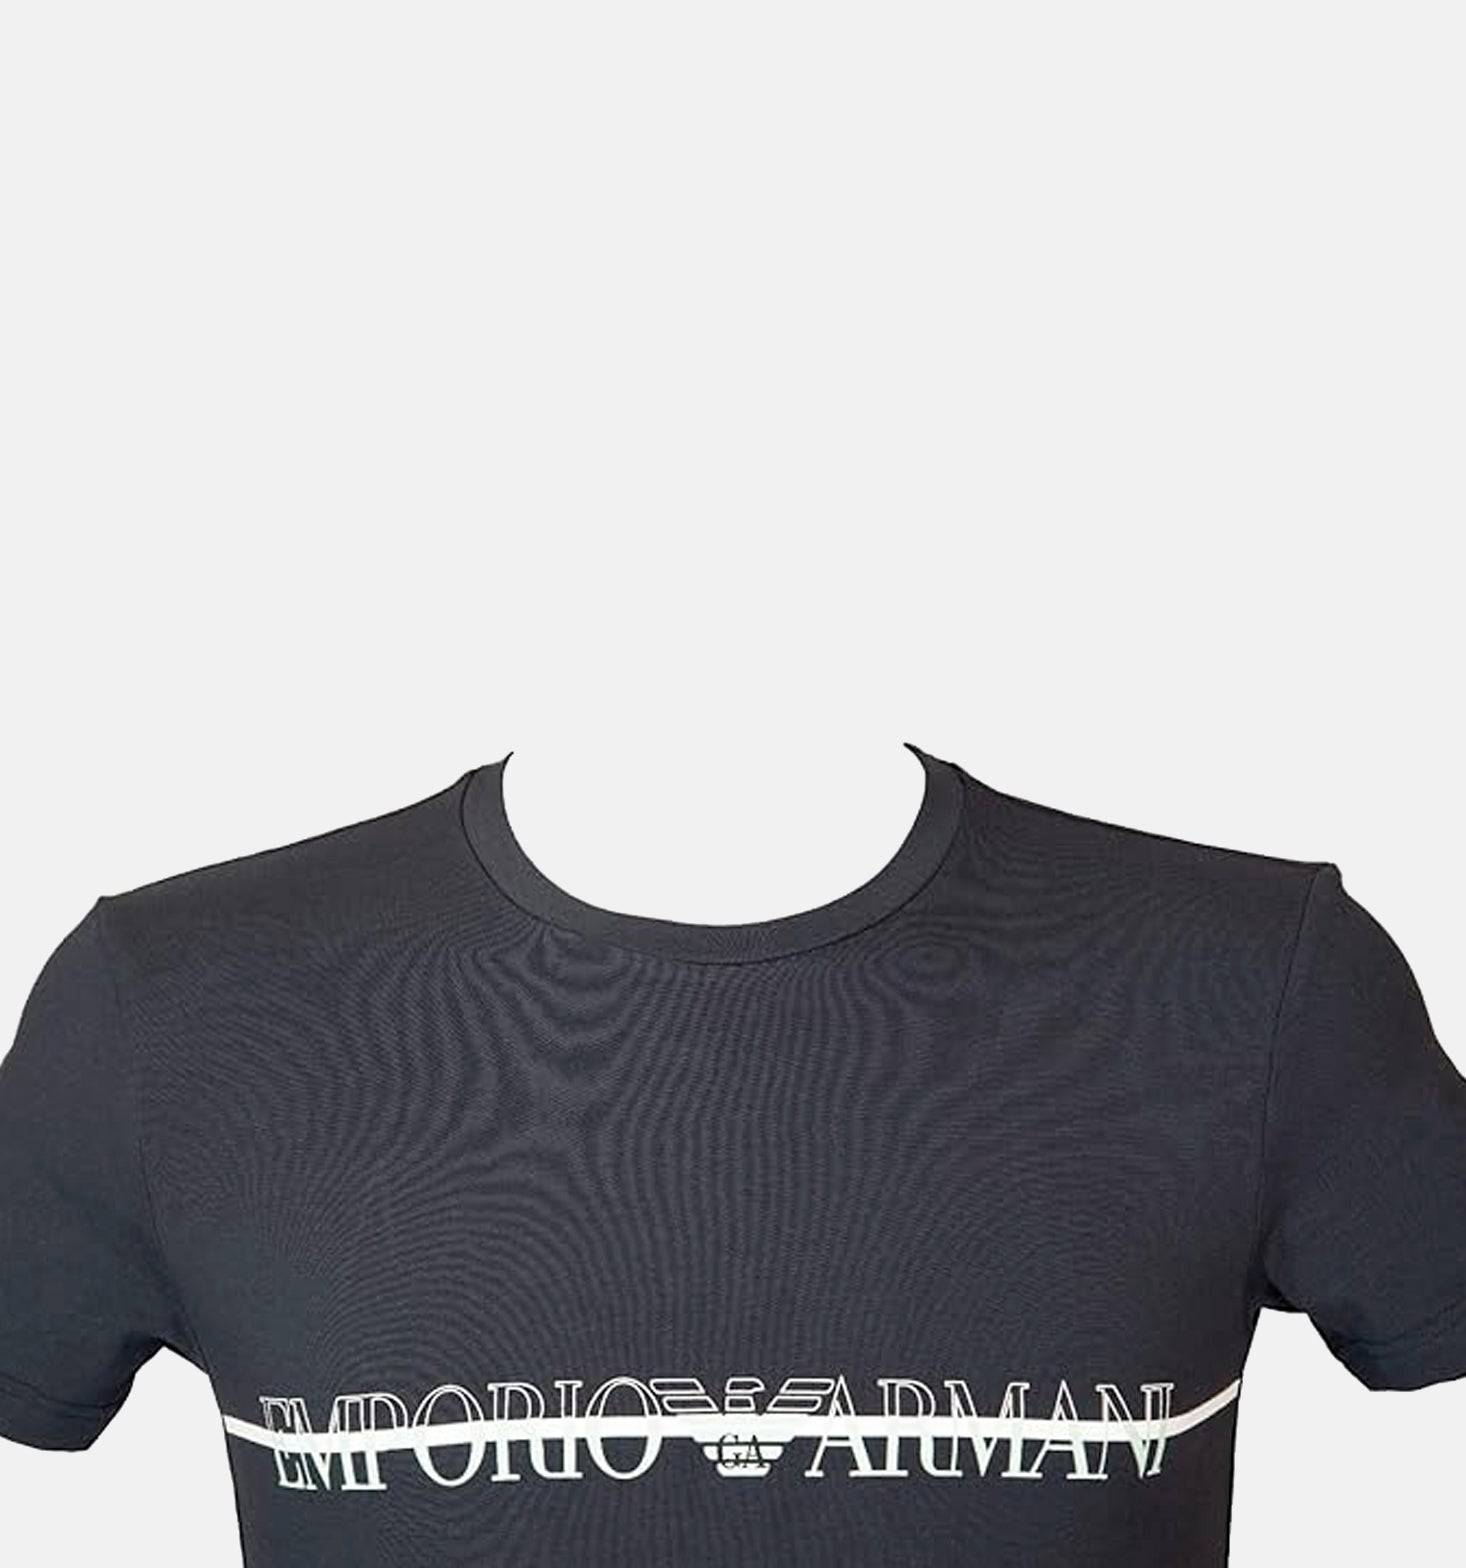 T-shirt Giro collo Uomo 4R729 111035 Emporio Armani evabiancheria